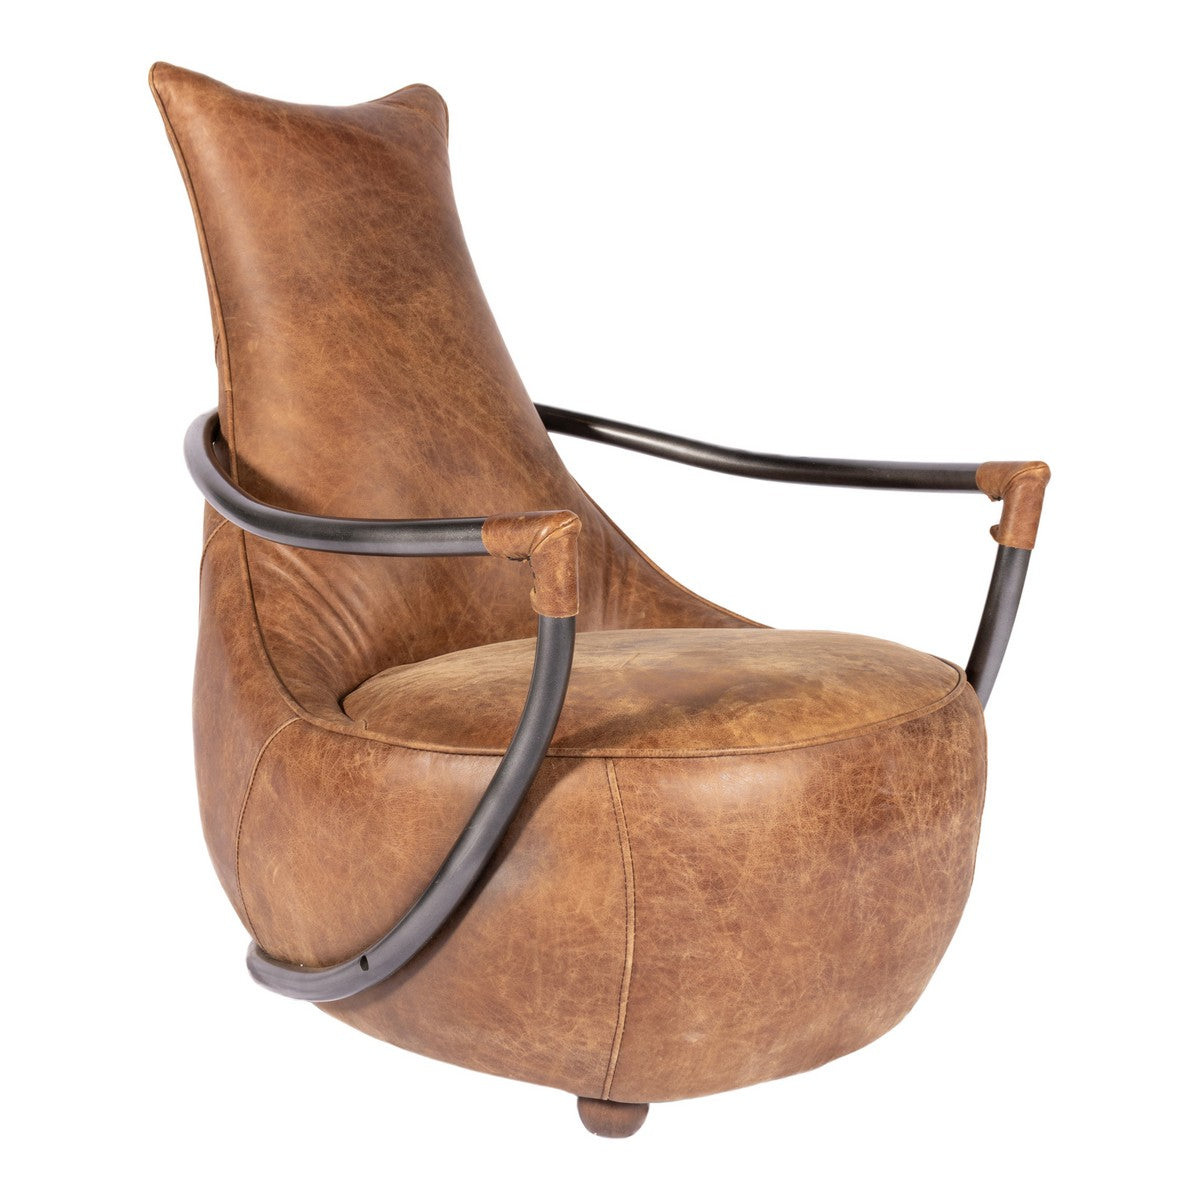 Moe's Home Collection Carlisle Club Chair Light Brown - PK-1026-03